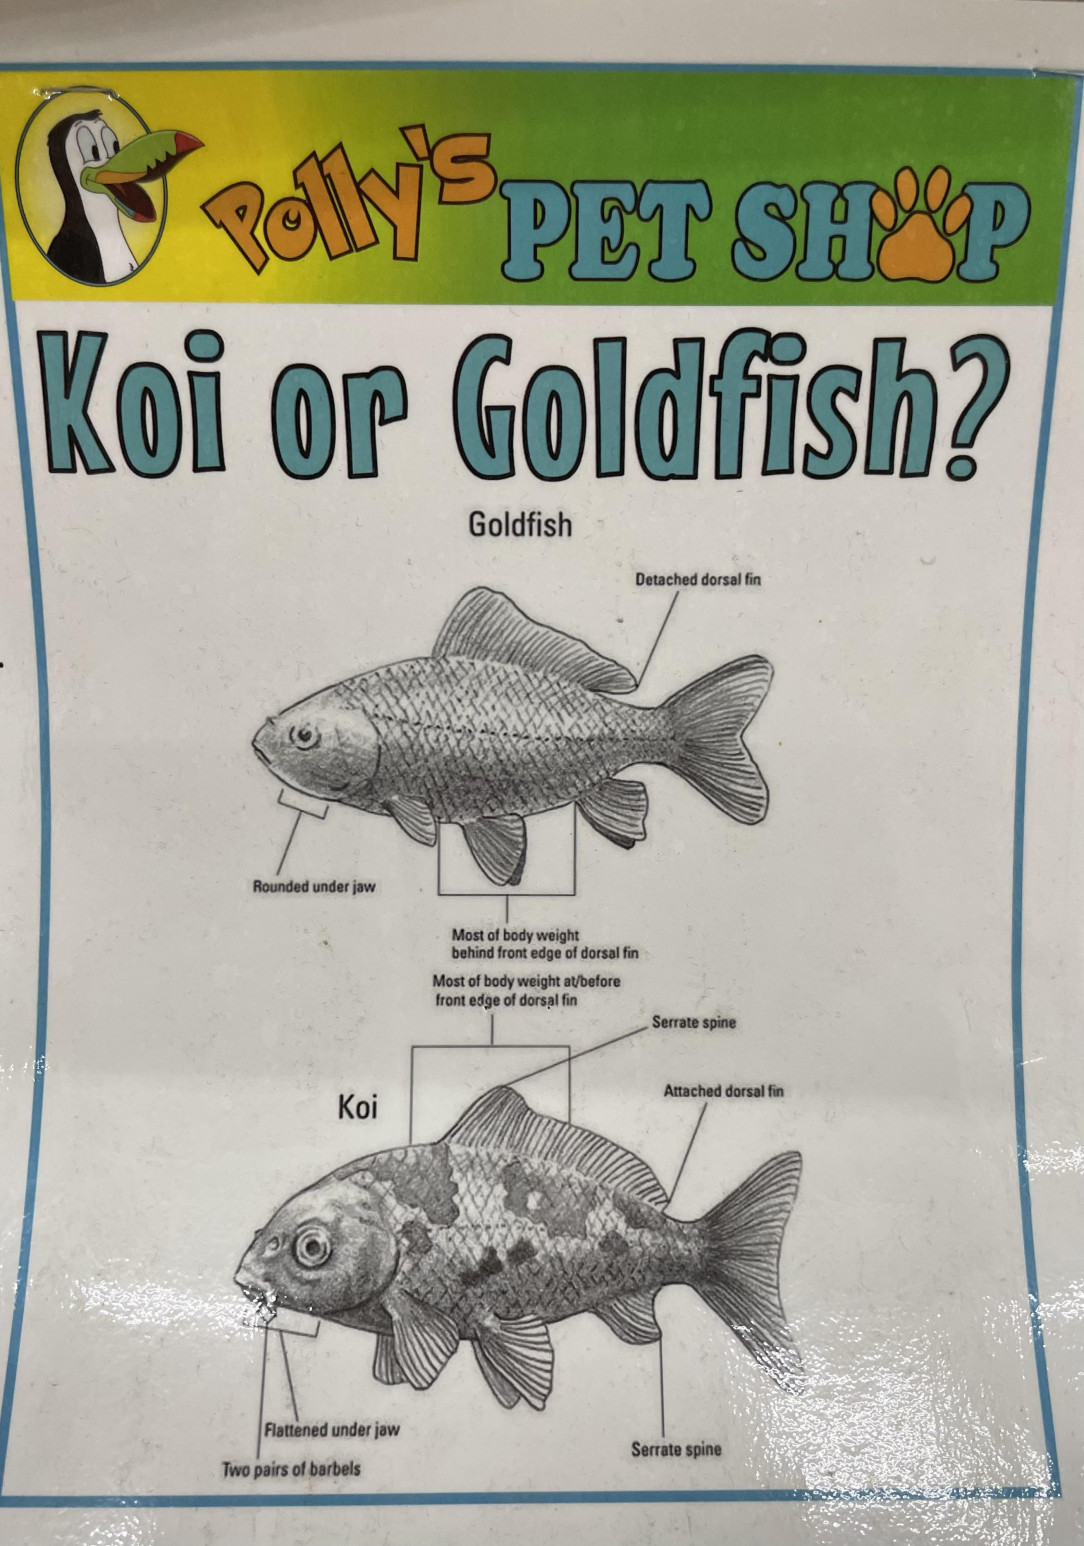 How to identify koi vs goldfish